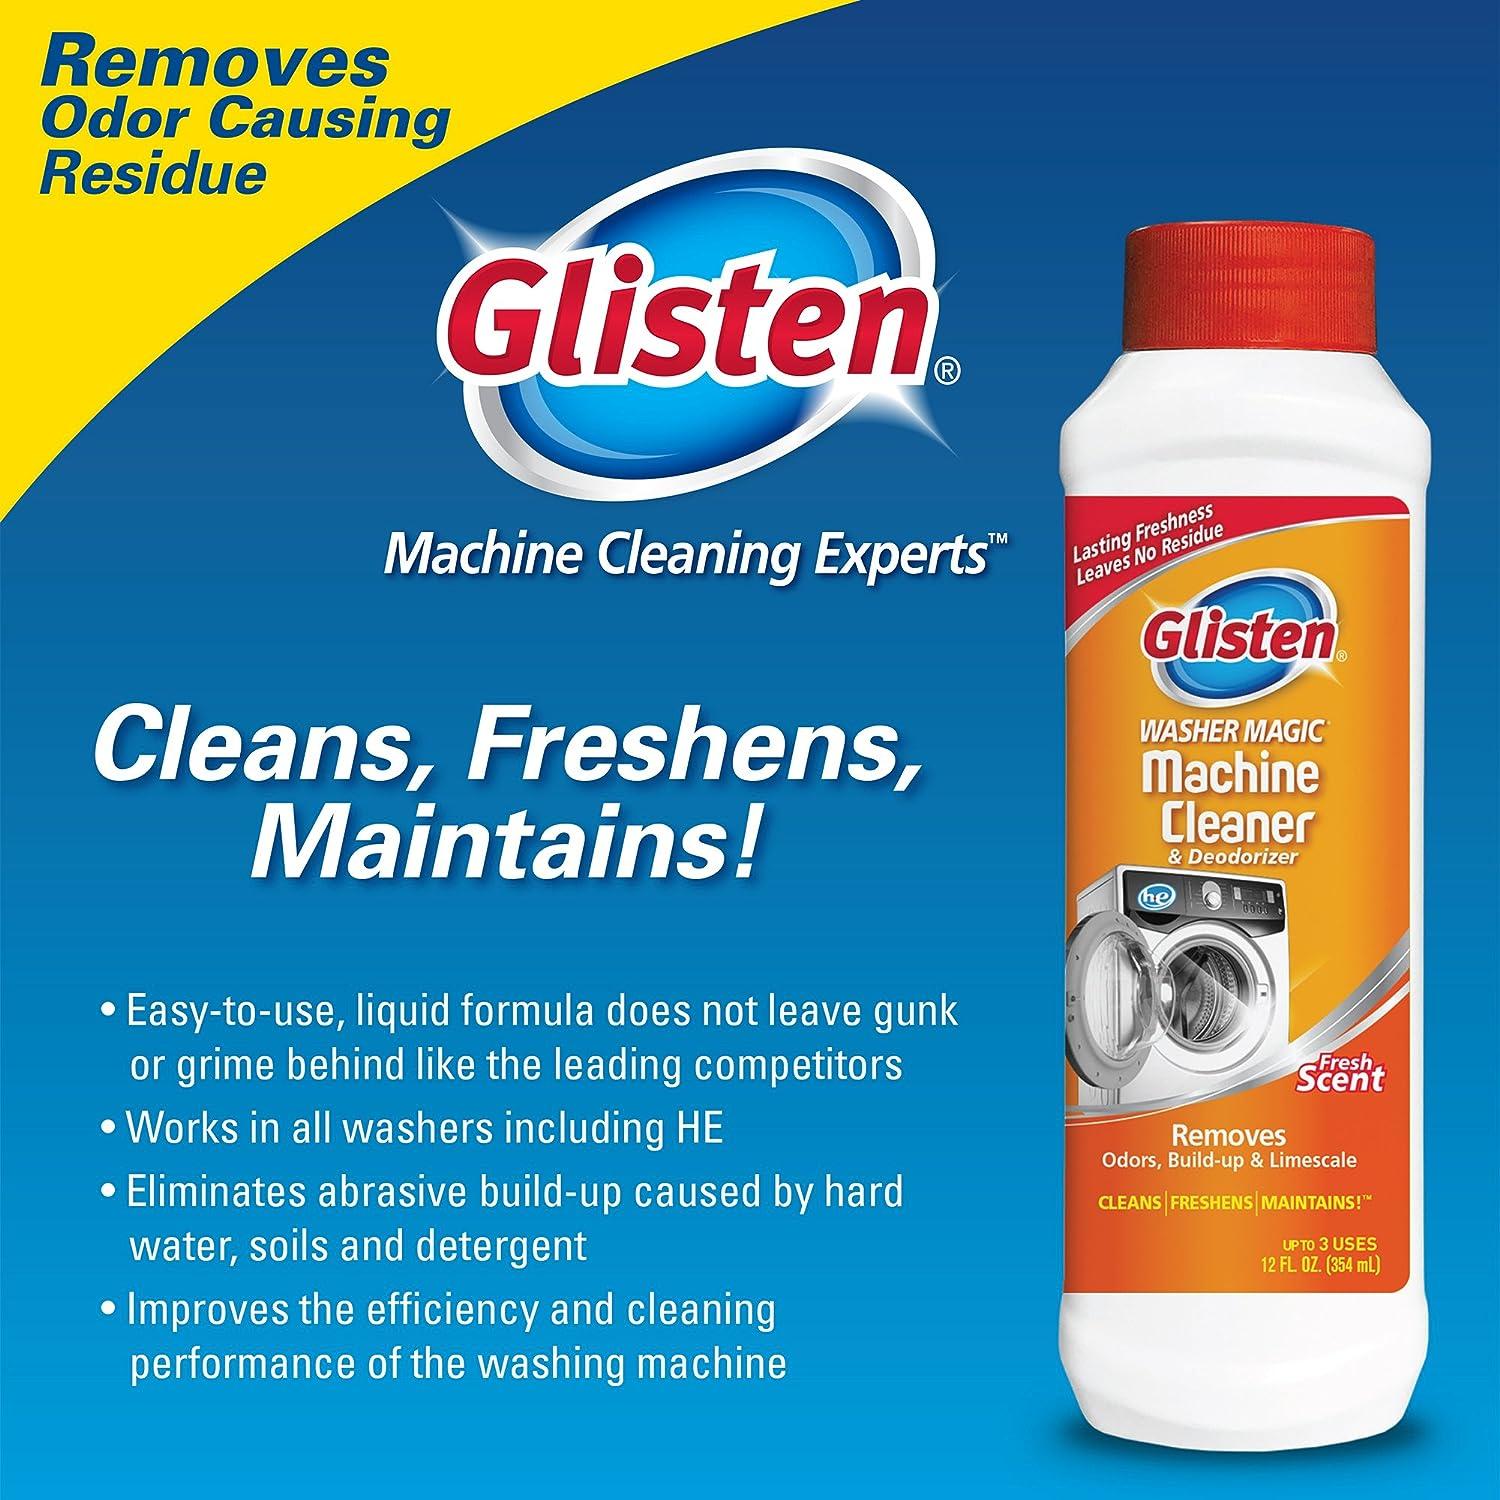 Glisten Dishwasher Magic Machine Cleaner and Disinfectant 2-Pack and Washer  Magic Washing Machine Cleaner and Deodorizer 2-Pack